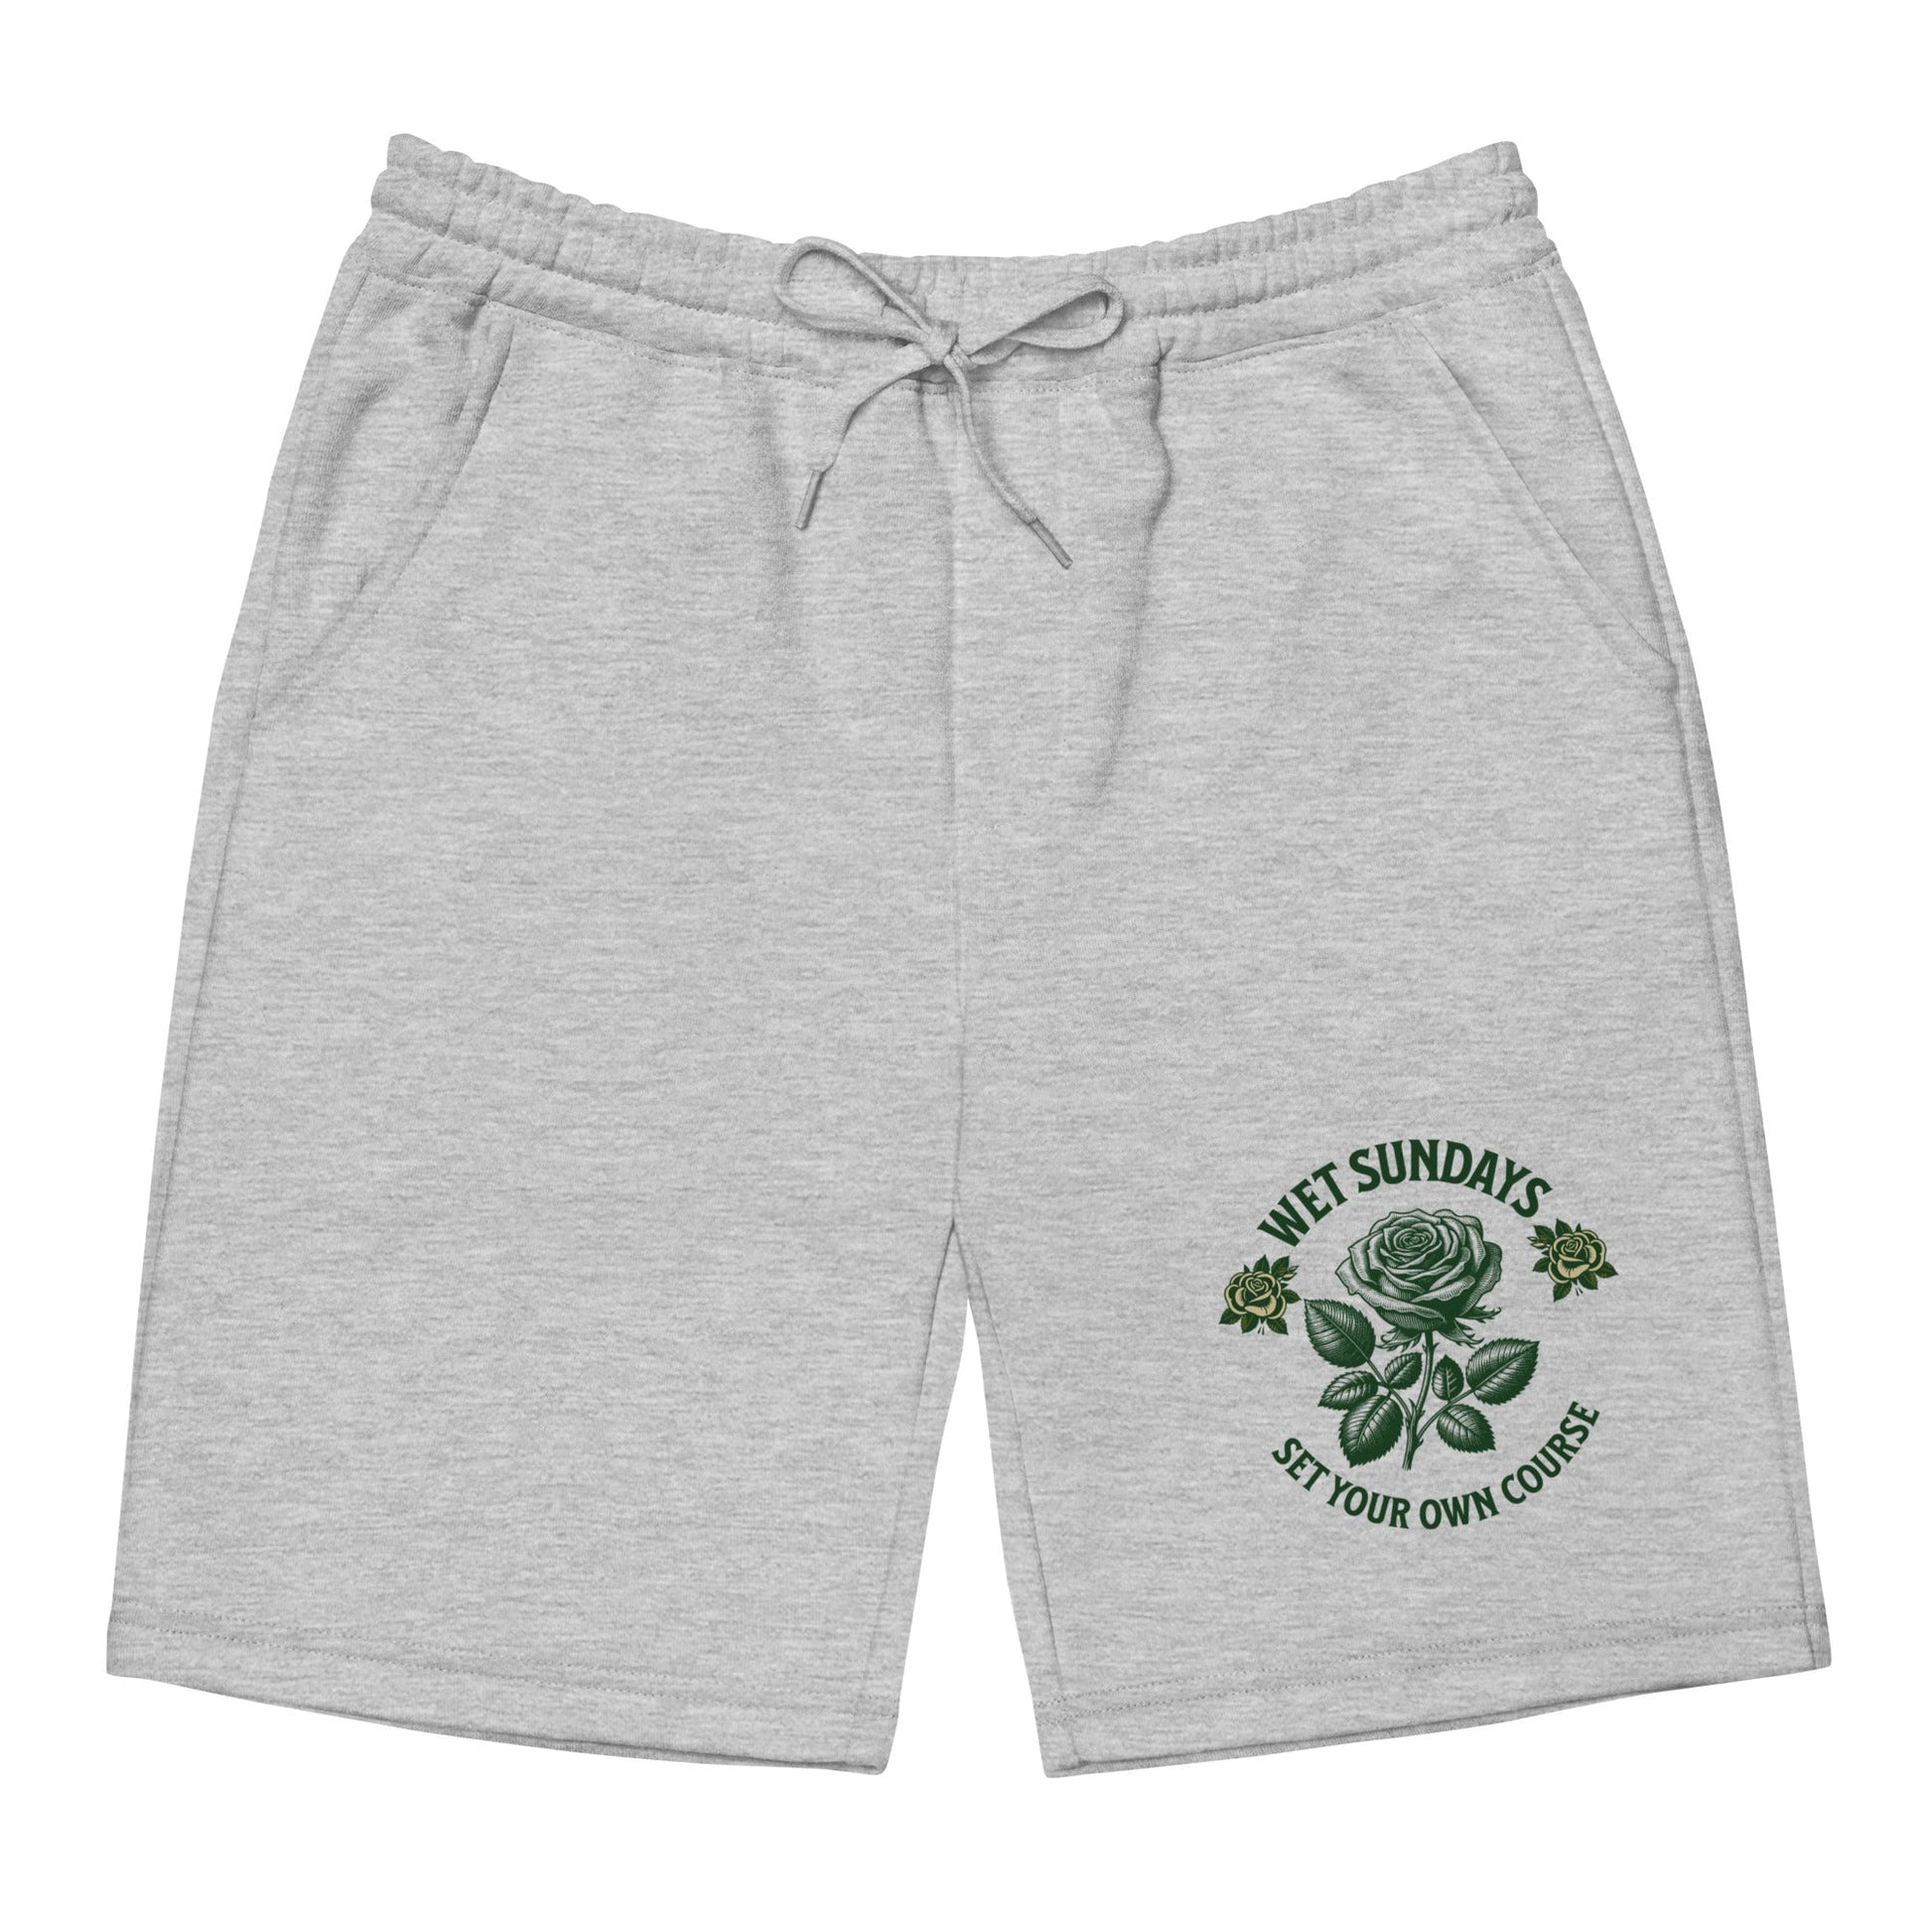 WS Green Roses fleece shorts - Wet Sundays